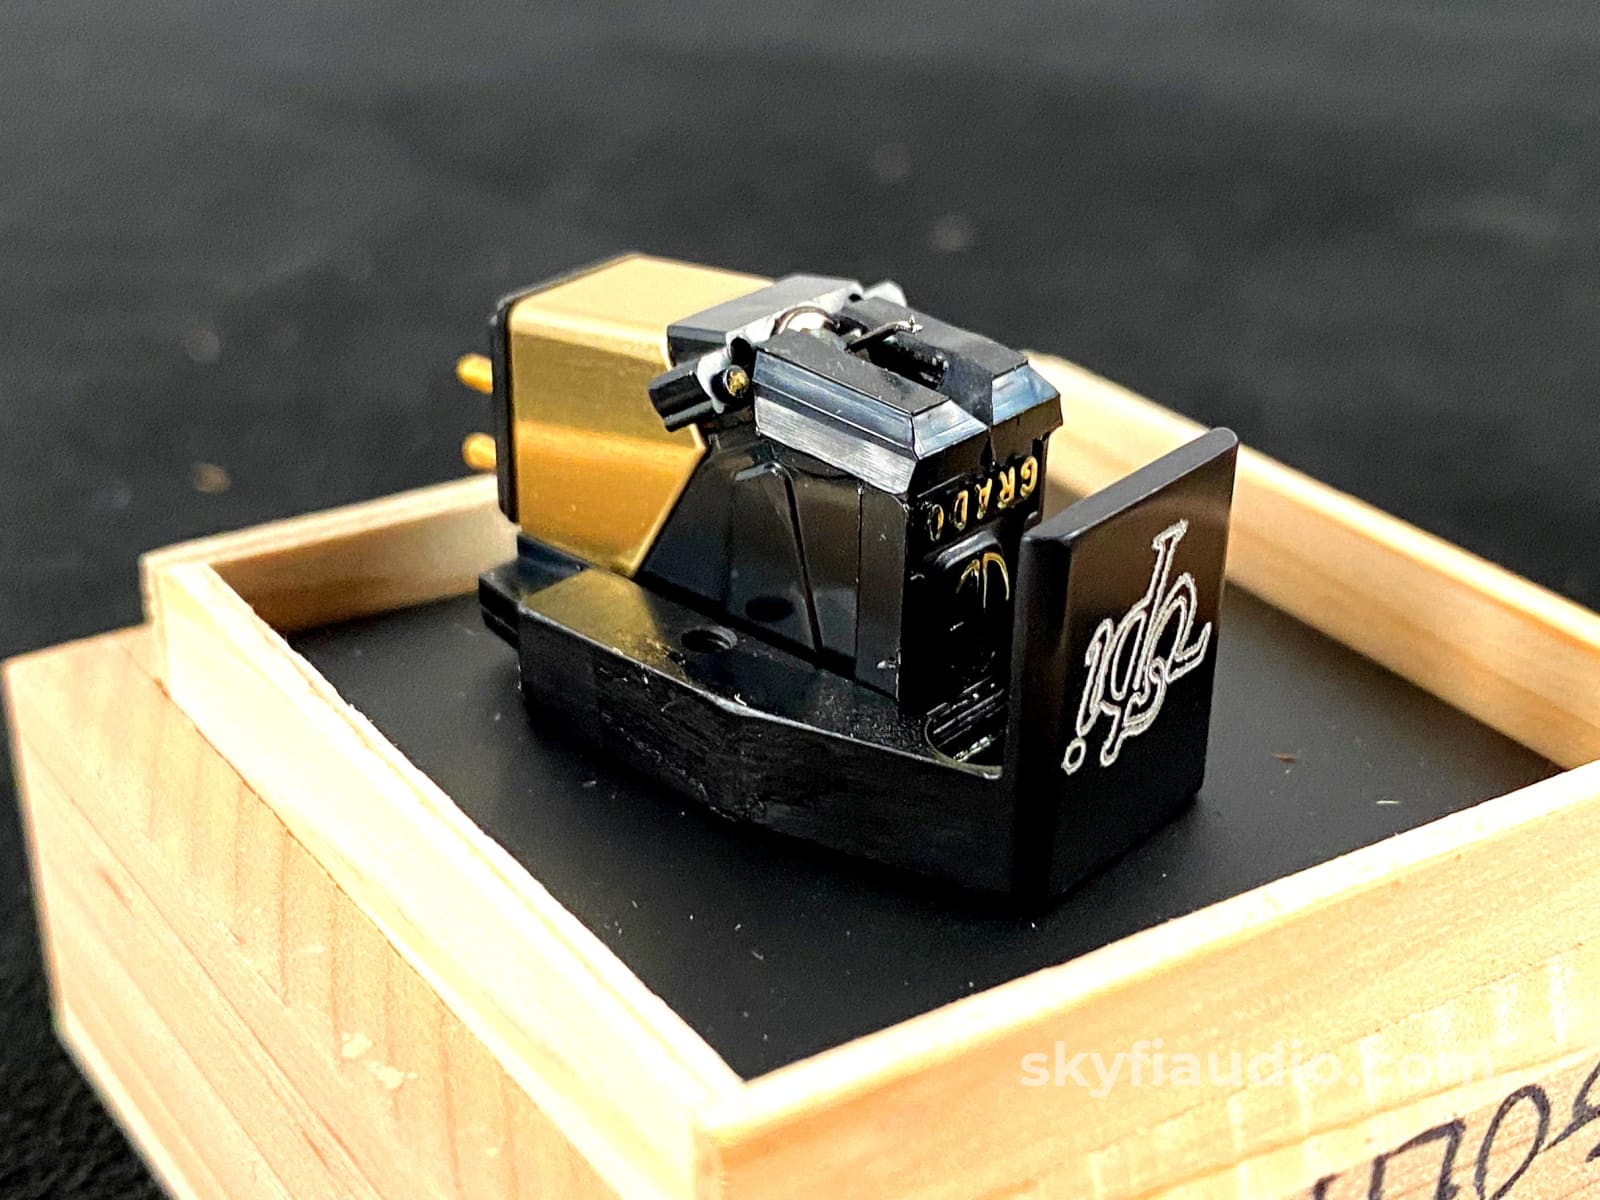 Grado Gold Phono Cartridge - Customized For Vpi Tonearms Mi (Moving-Iron)